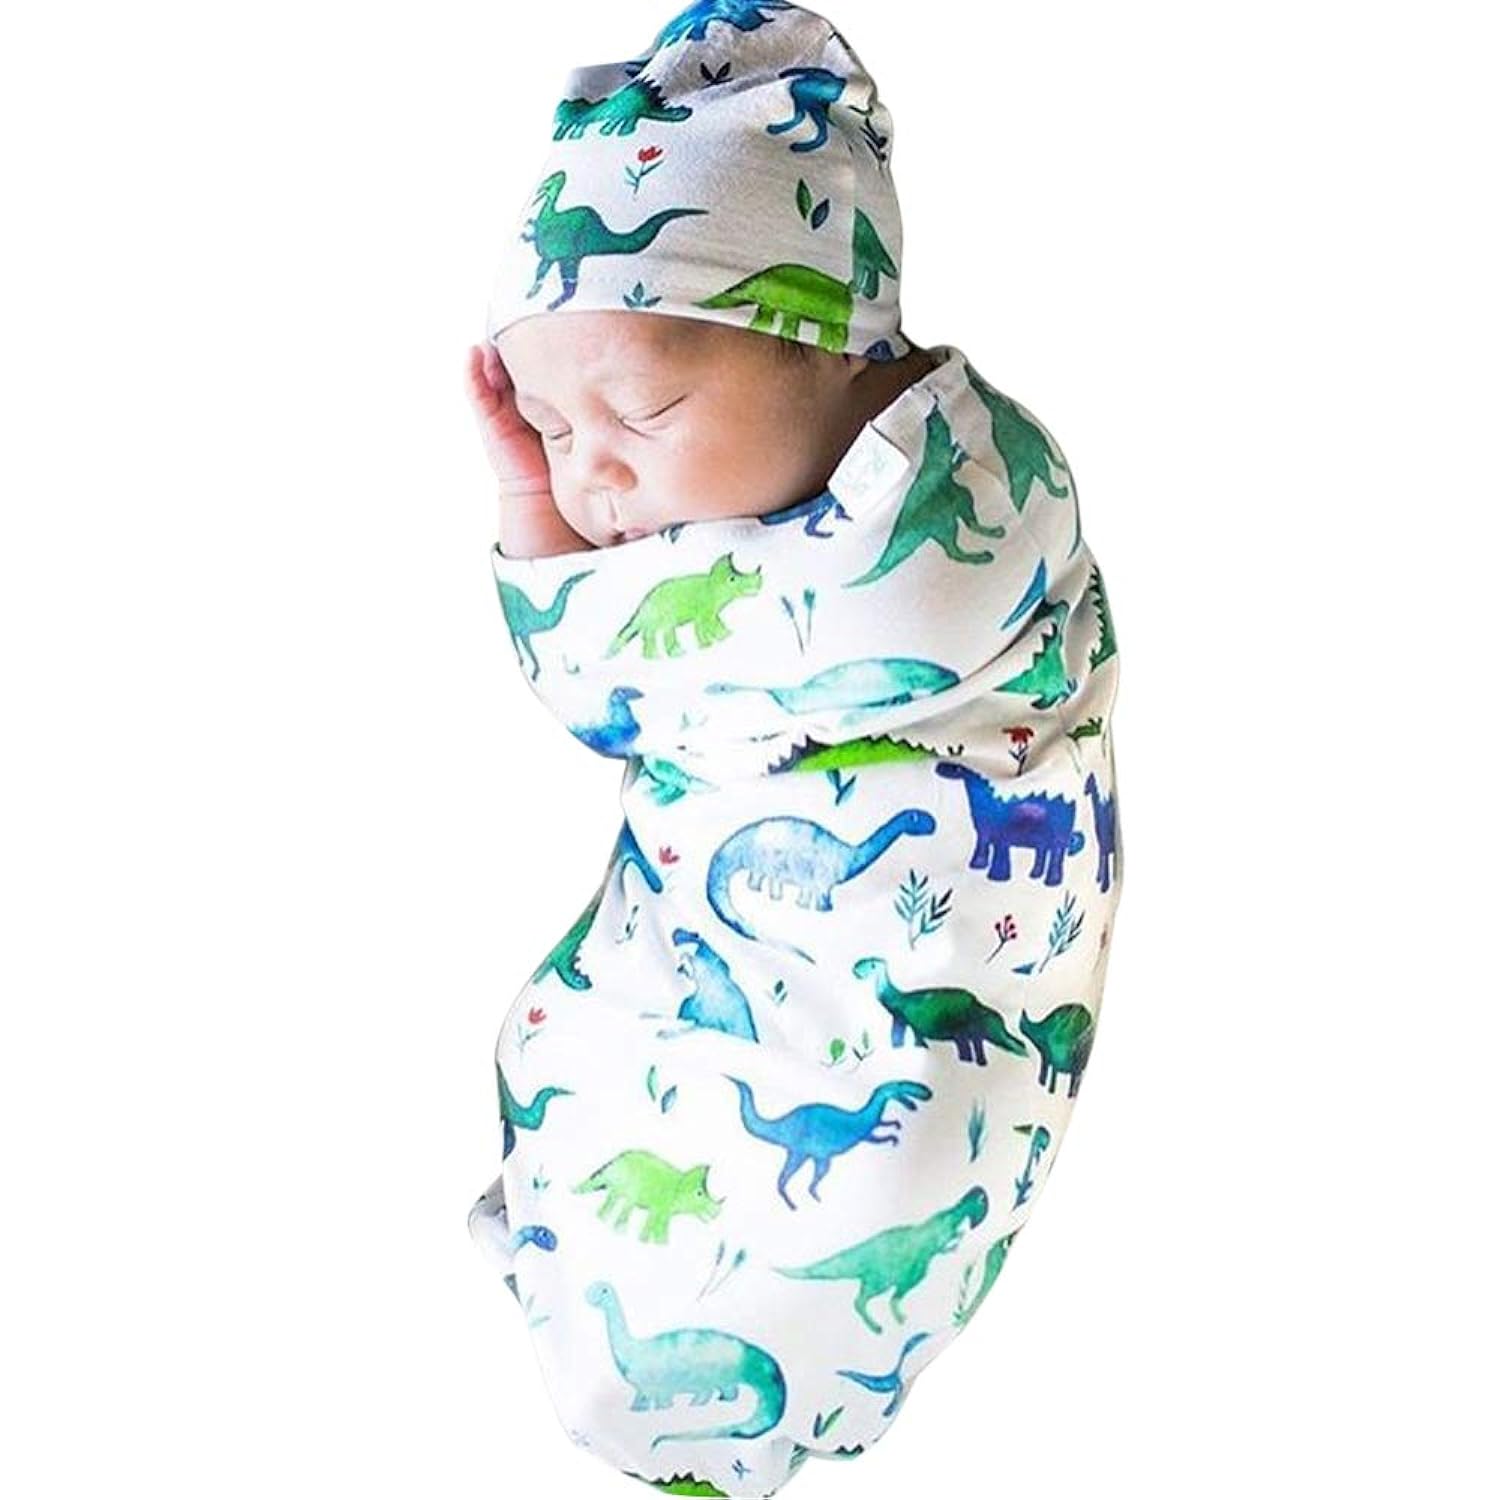 TKM Home Newborn Baby Swaddle Sack With Hat Or Headband Set Soft Sleeping Bag Sack Wrap One Size Dinosaur